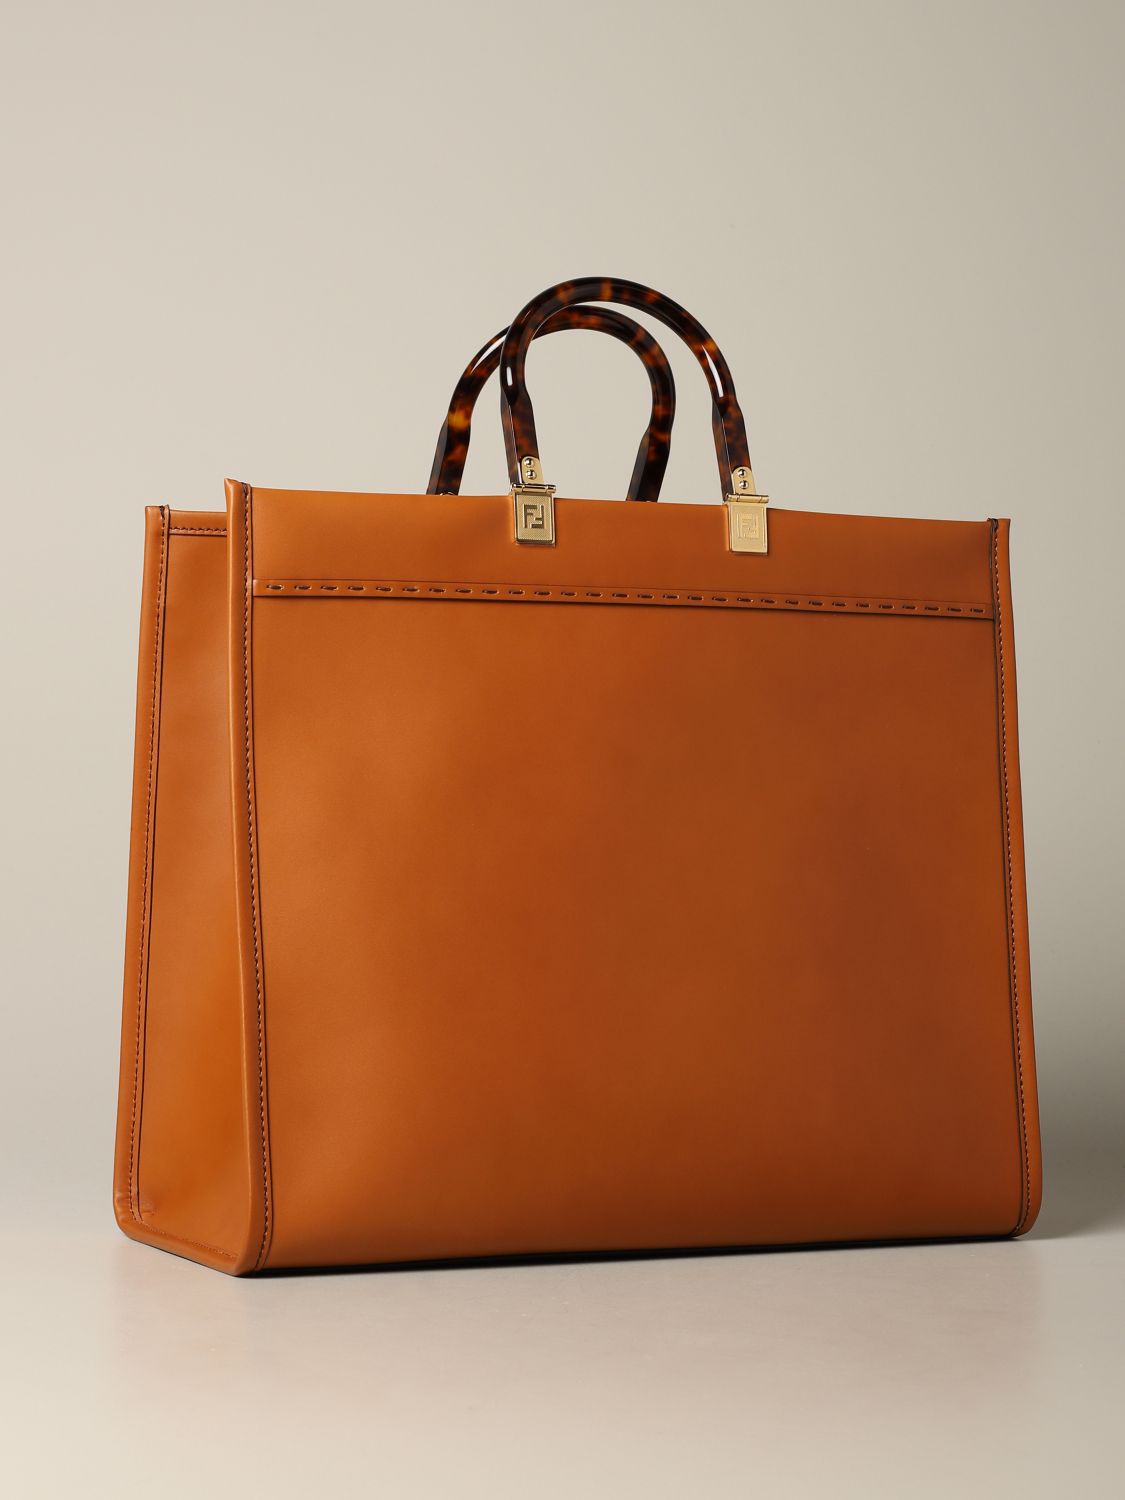 FENDI: Sunshine shopping bag in leather with logo | Tote Bags Fendi ...